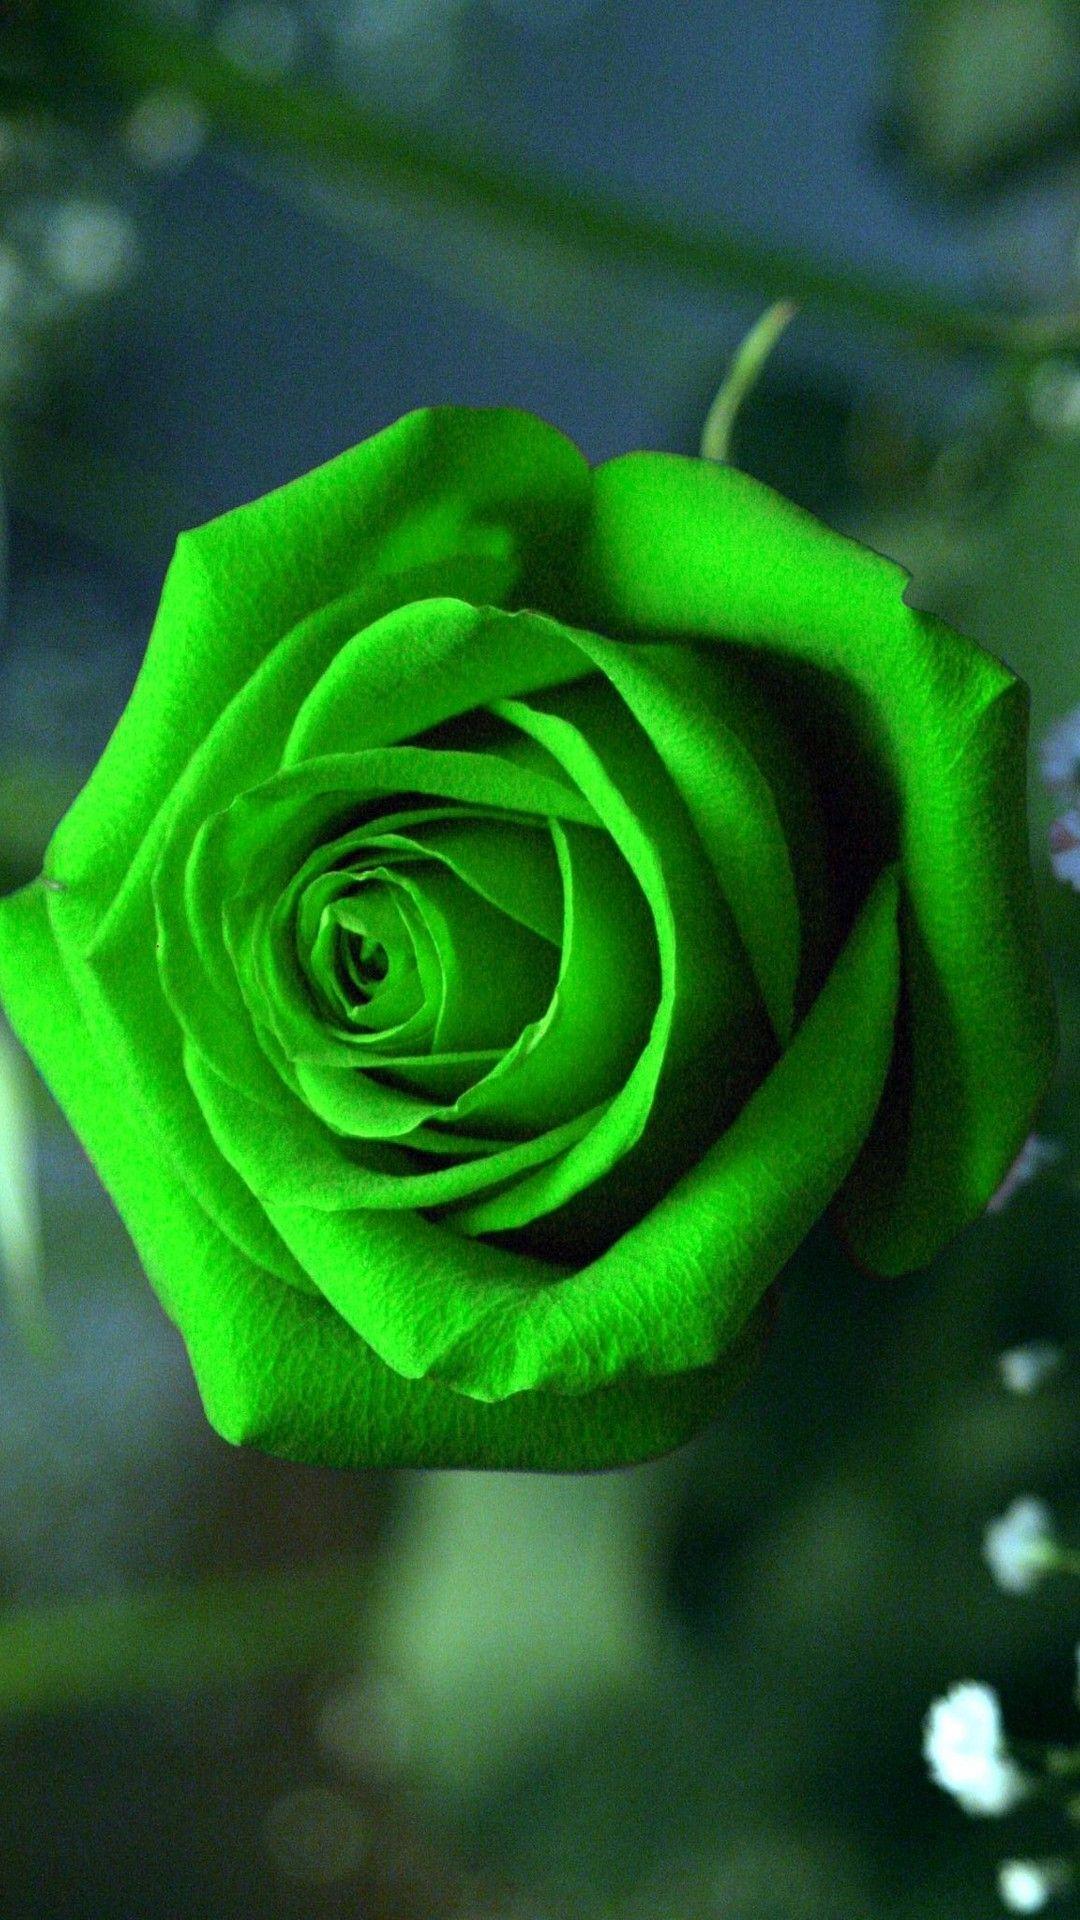 Green Rose Mobile Wallpaper. Best HD Wallpaper. Rose wallpaper, Pink flowers wallpaper, Green rose